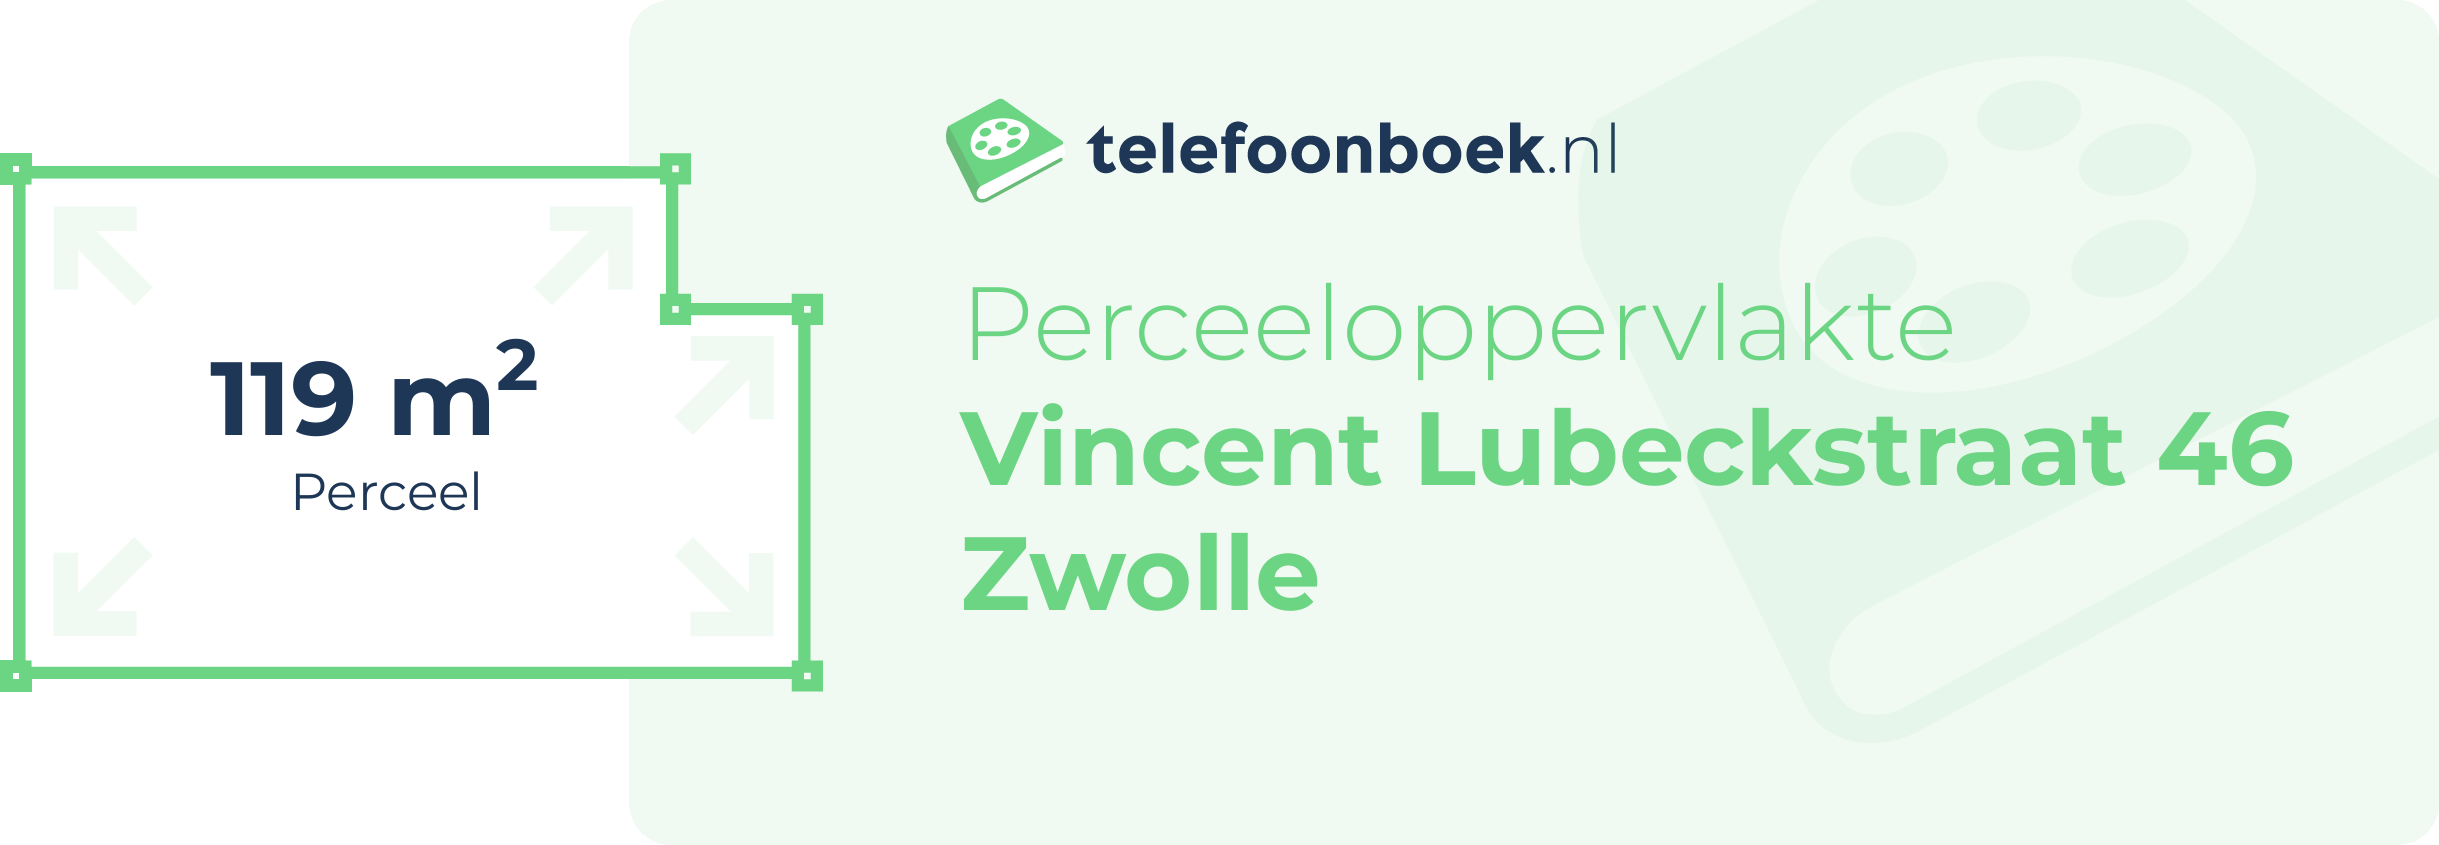 Perceeloppervlakte Vincent Lubeckstraat 46 Zwolle